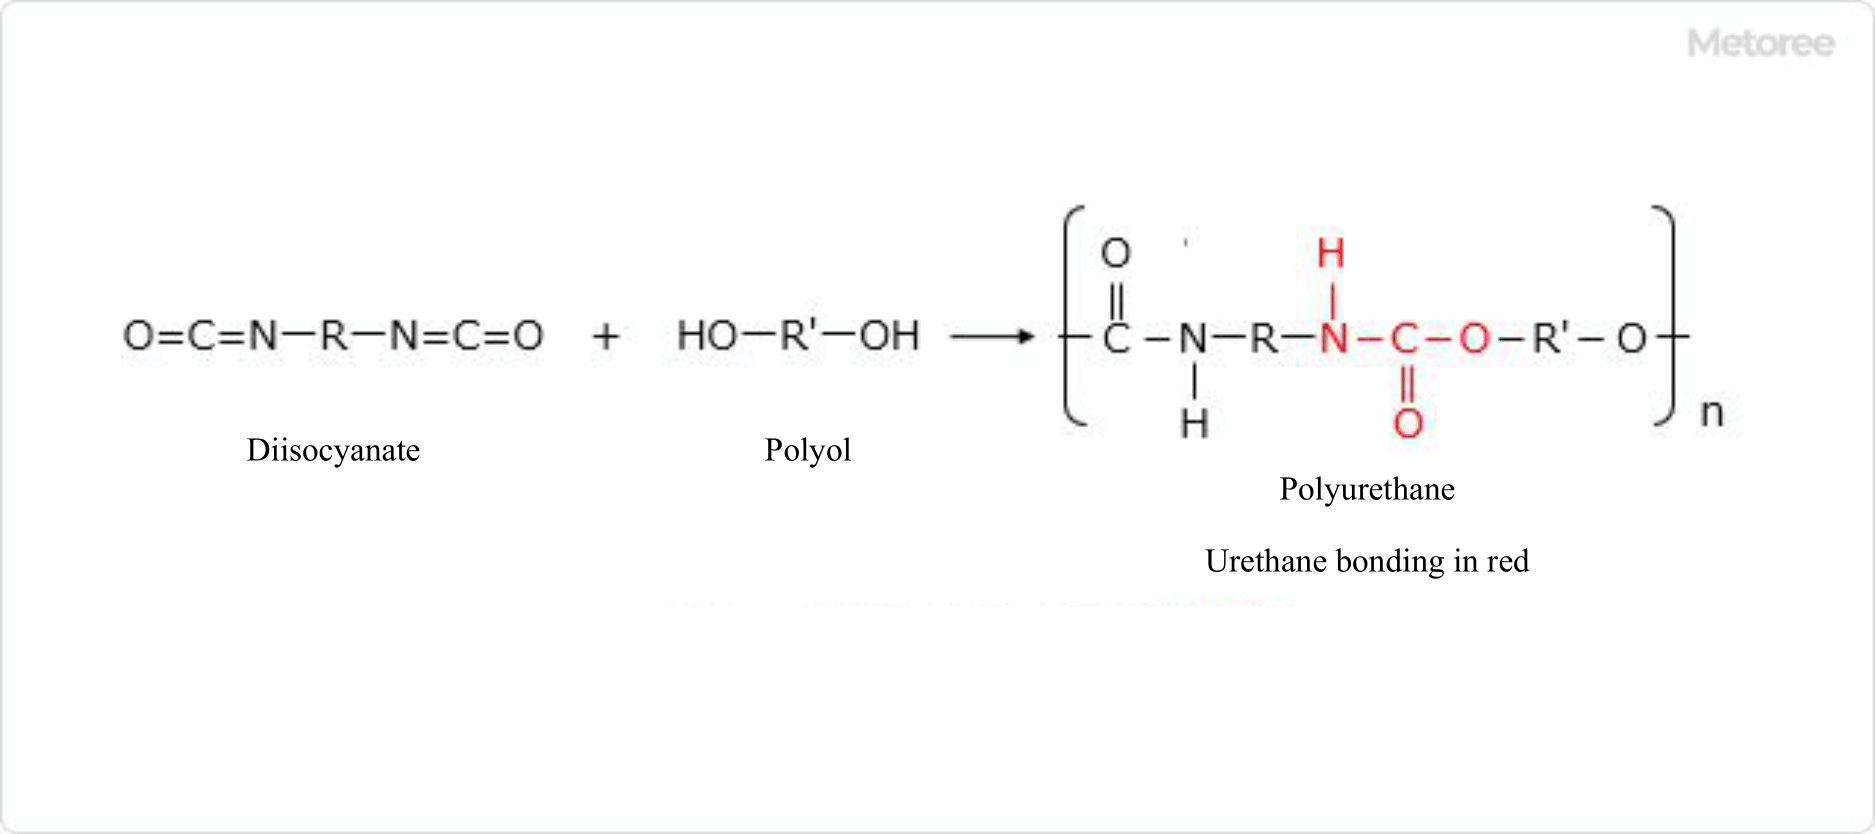 Figure 1. Polyurethane synthesis reaction formula